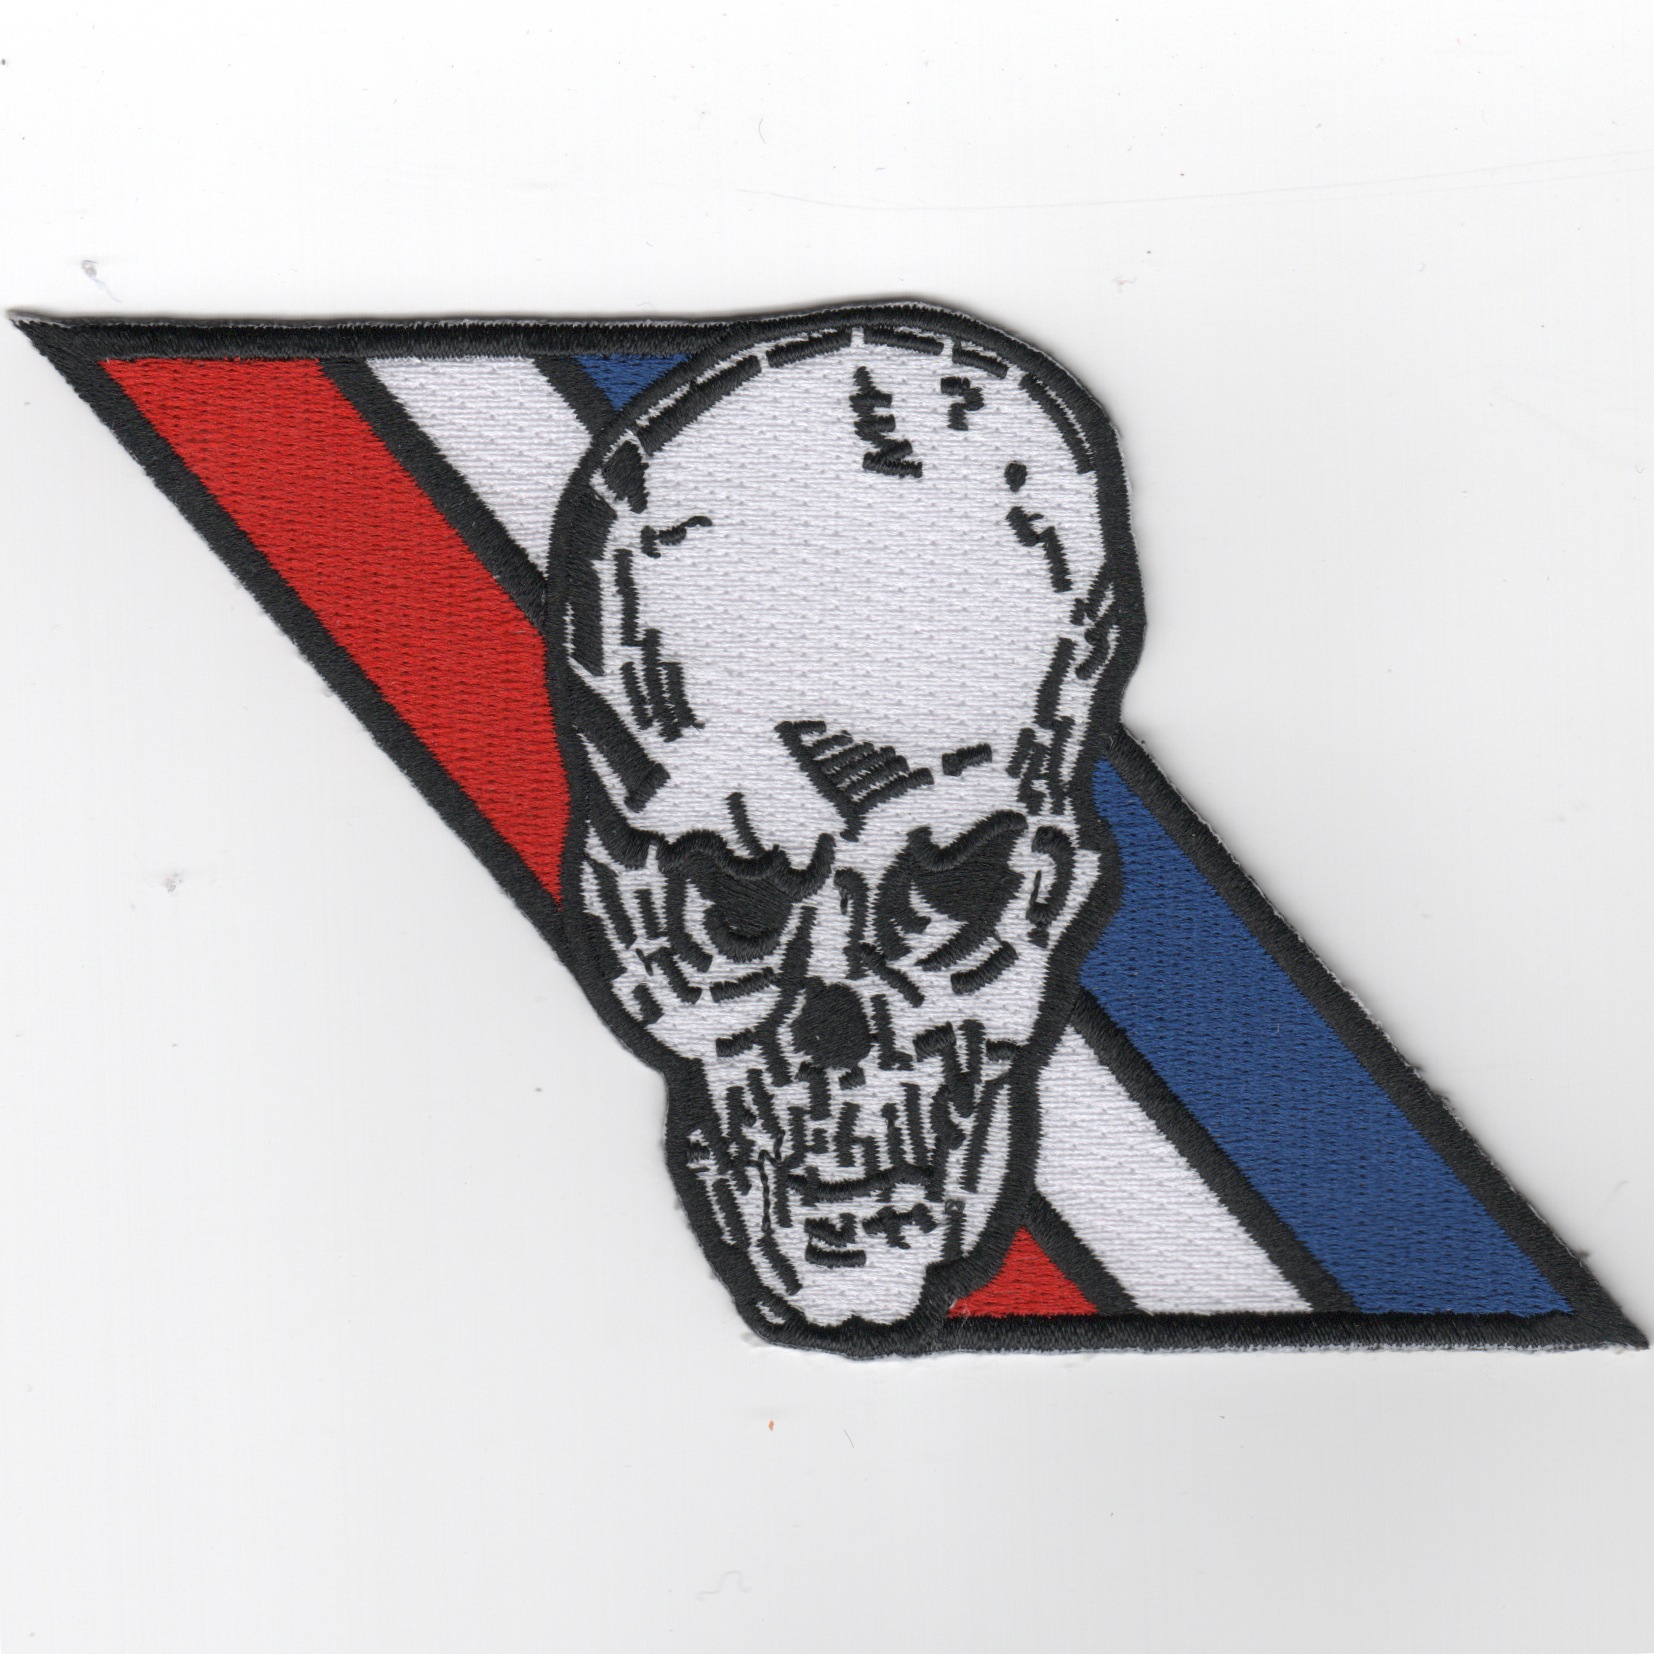 VF-2 'Skull' (R/W/B Stripes) Patch